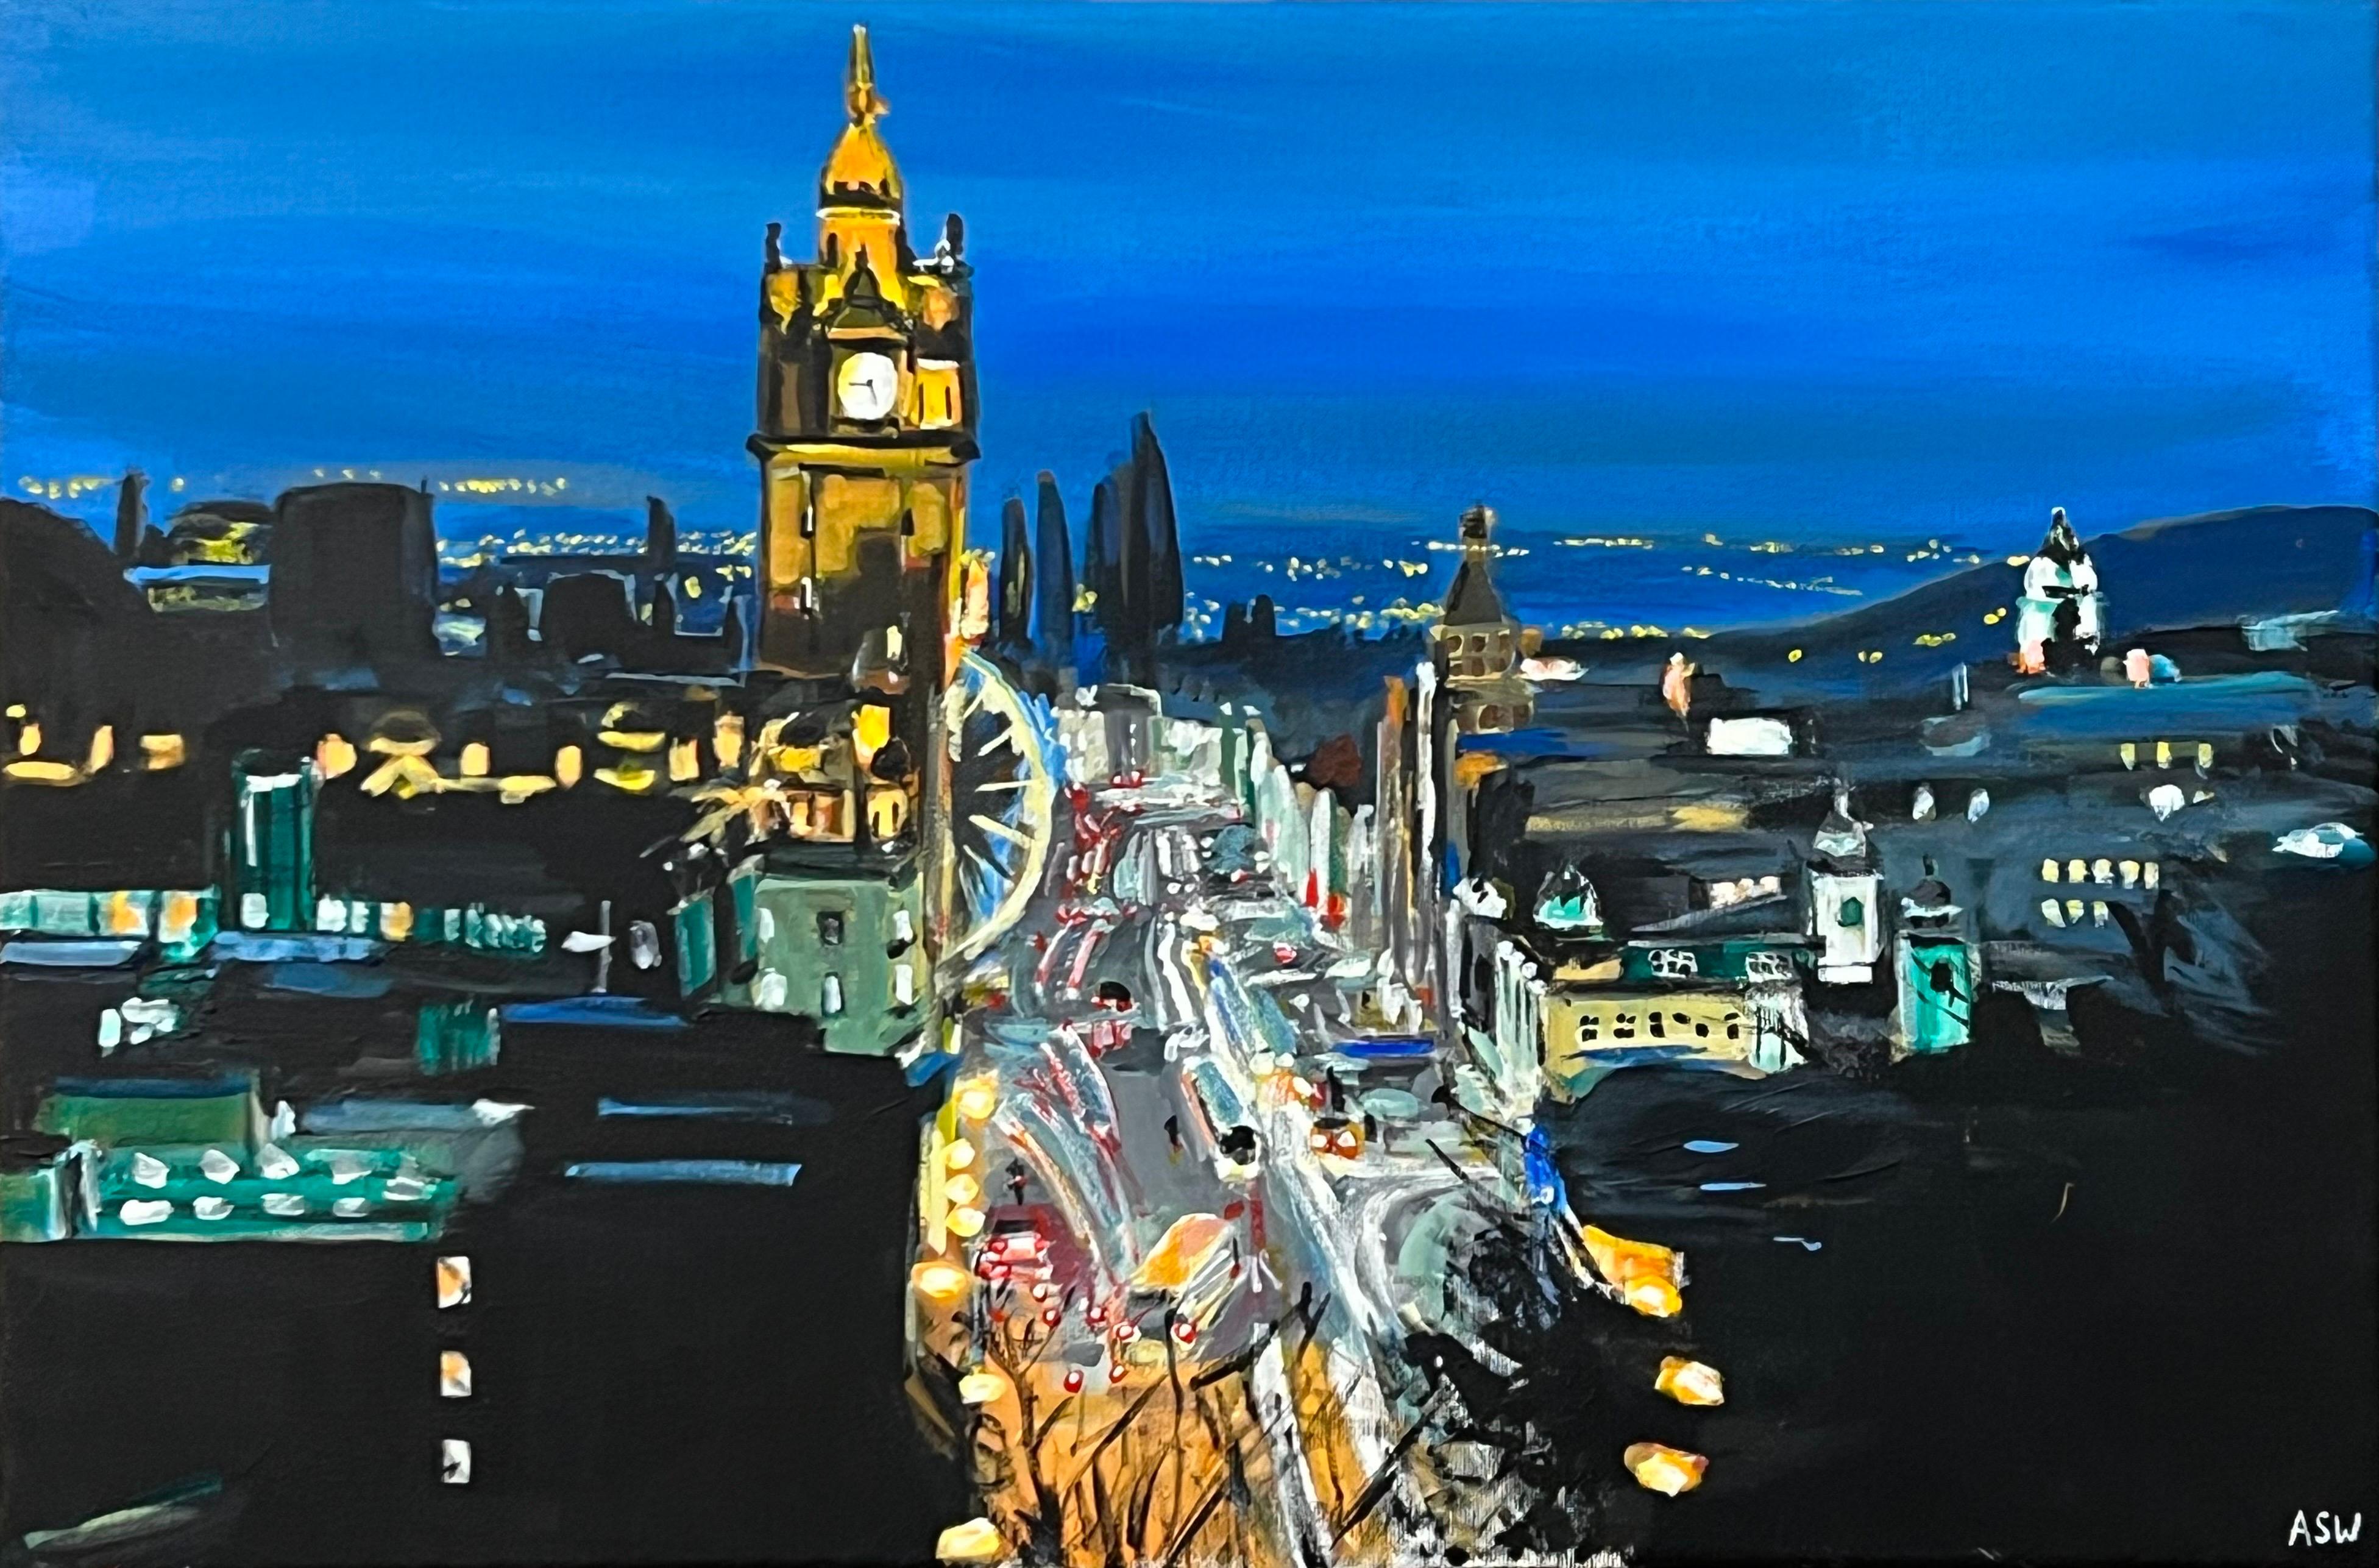 Angela Wakefield Figurative Painting - Modern Impressionist Painting of Princes Street in Edinburgh Scotland at Night